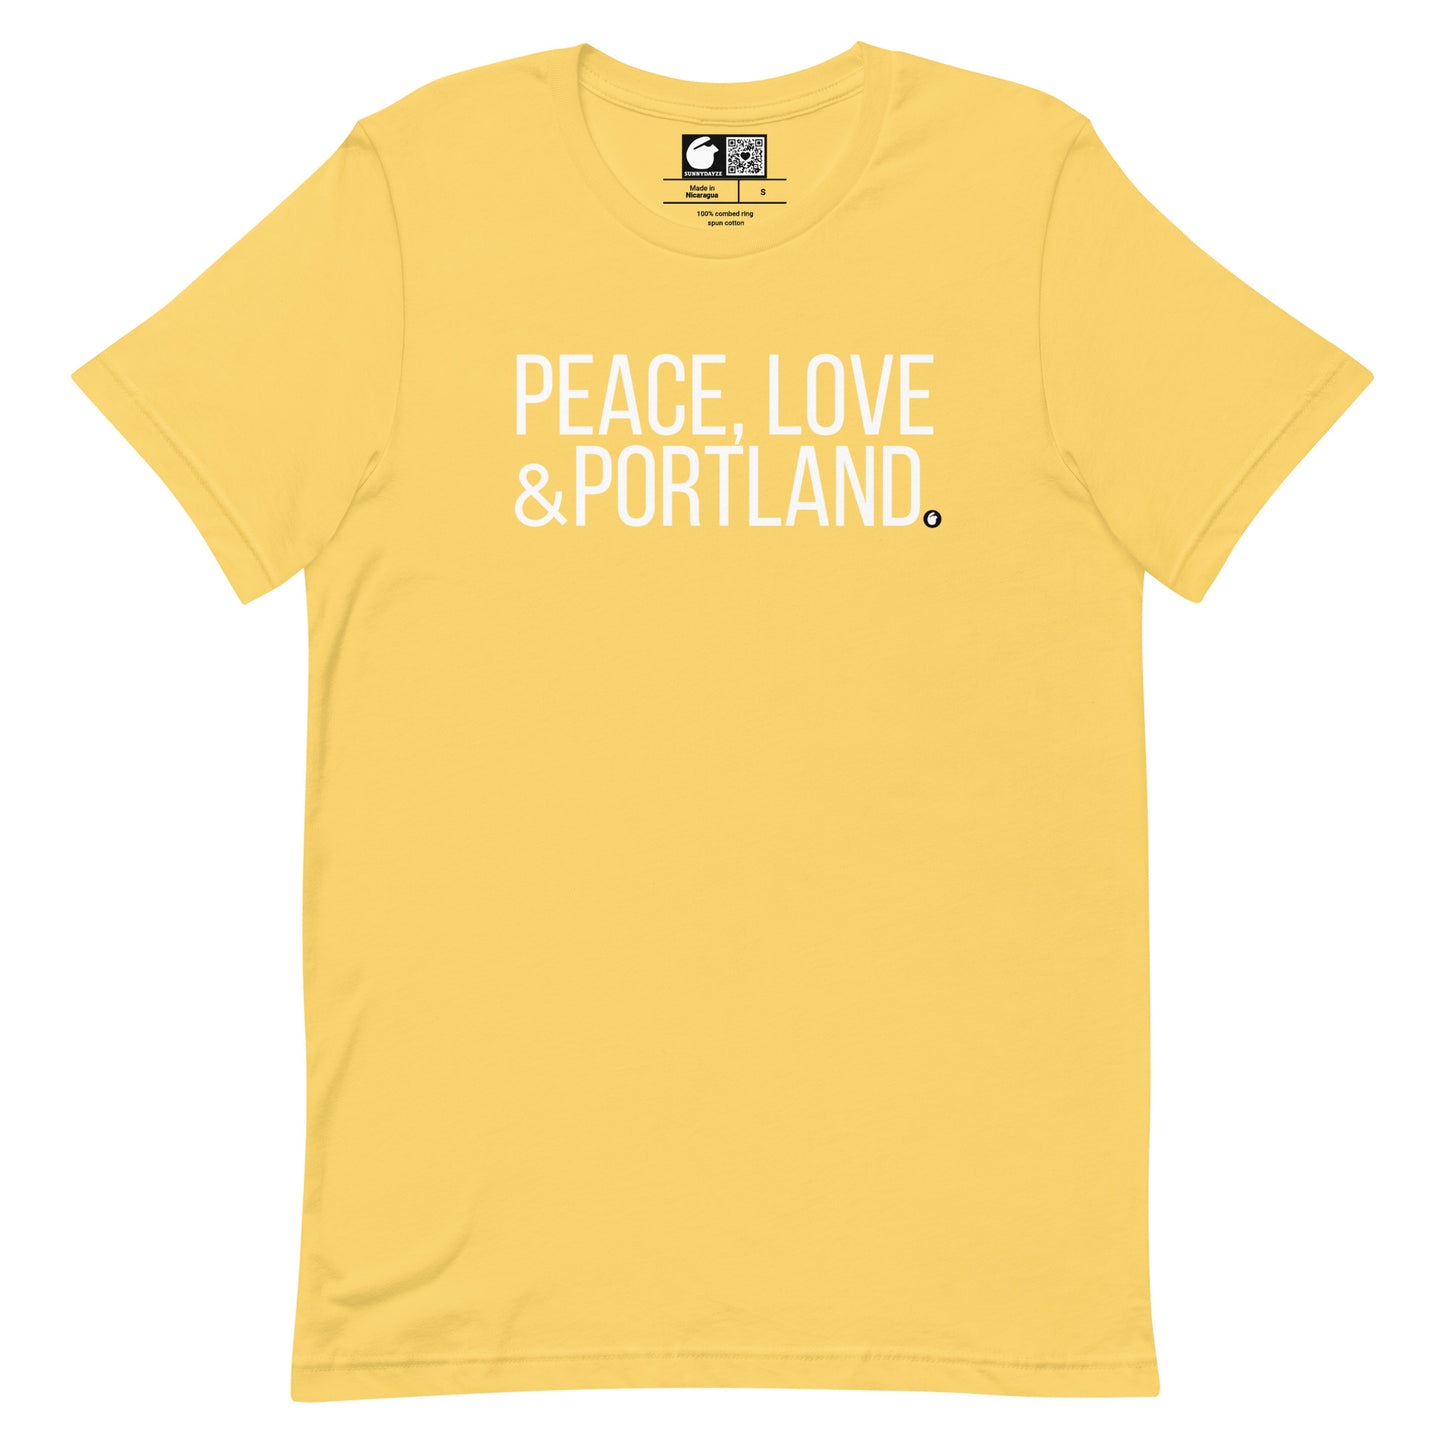 PORTLAND Short-Sleeve unisex t-shirt